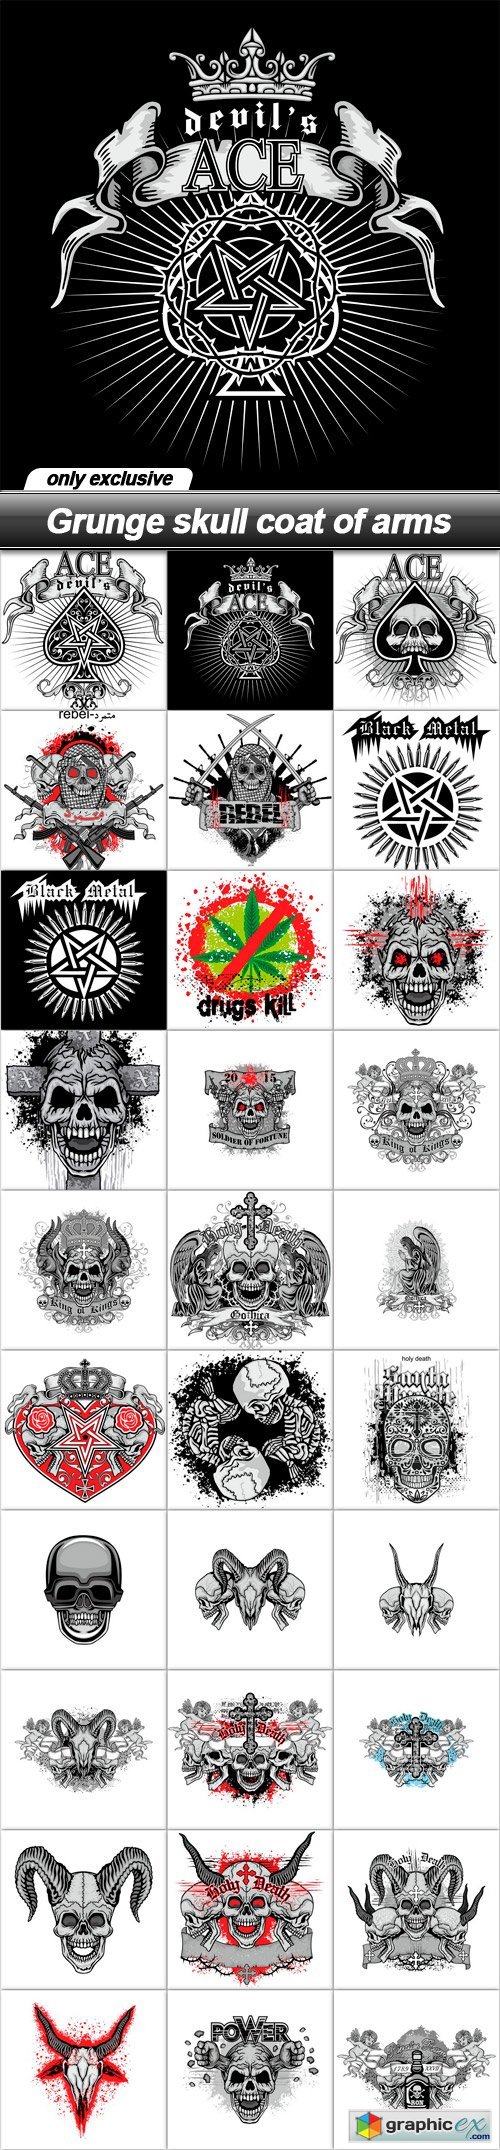 Grunge skull coat of arms - 30 EPS